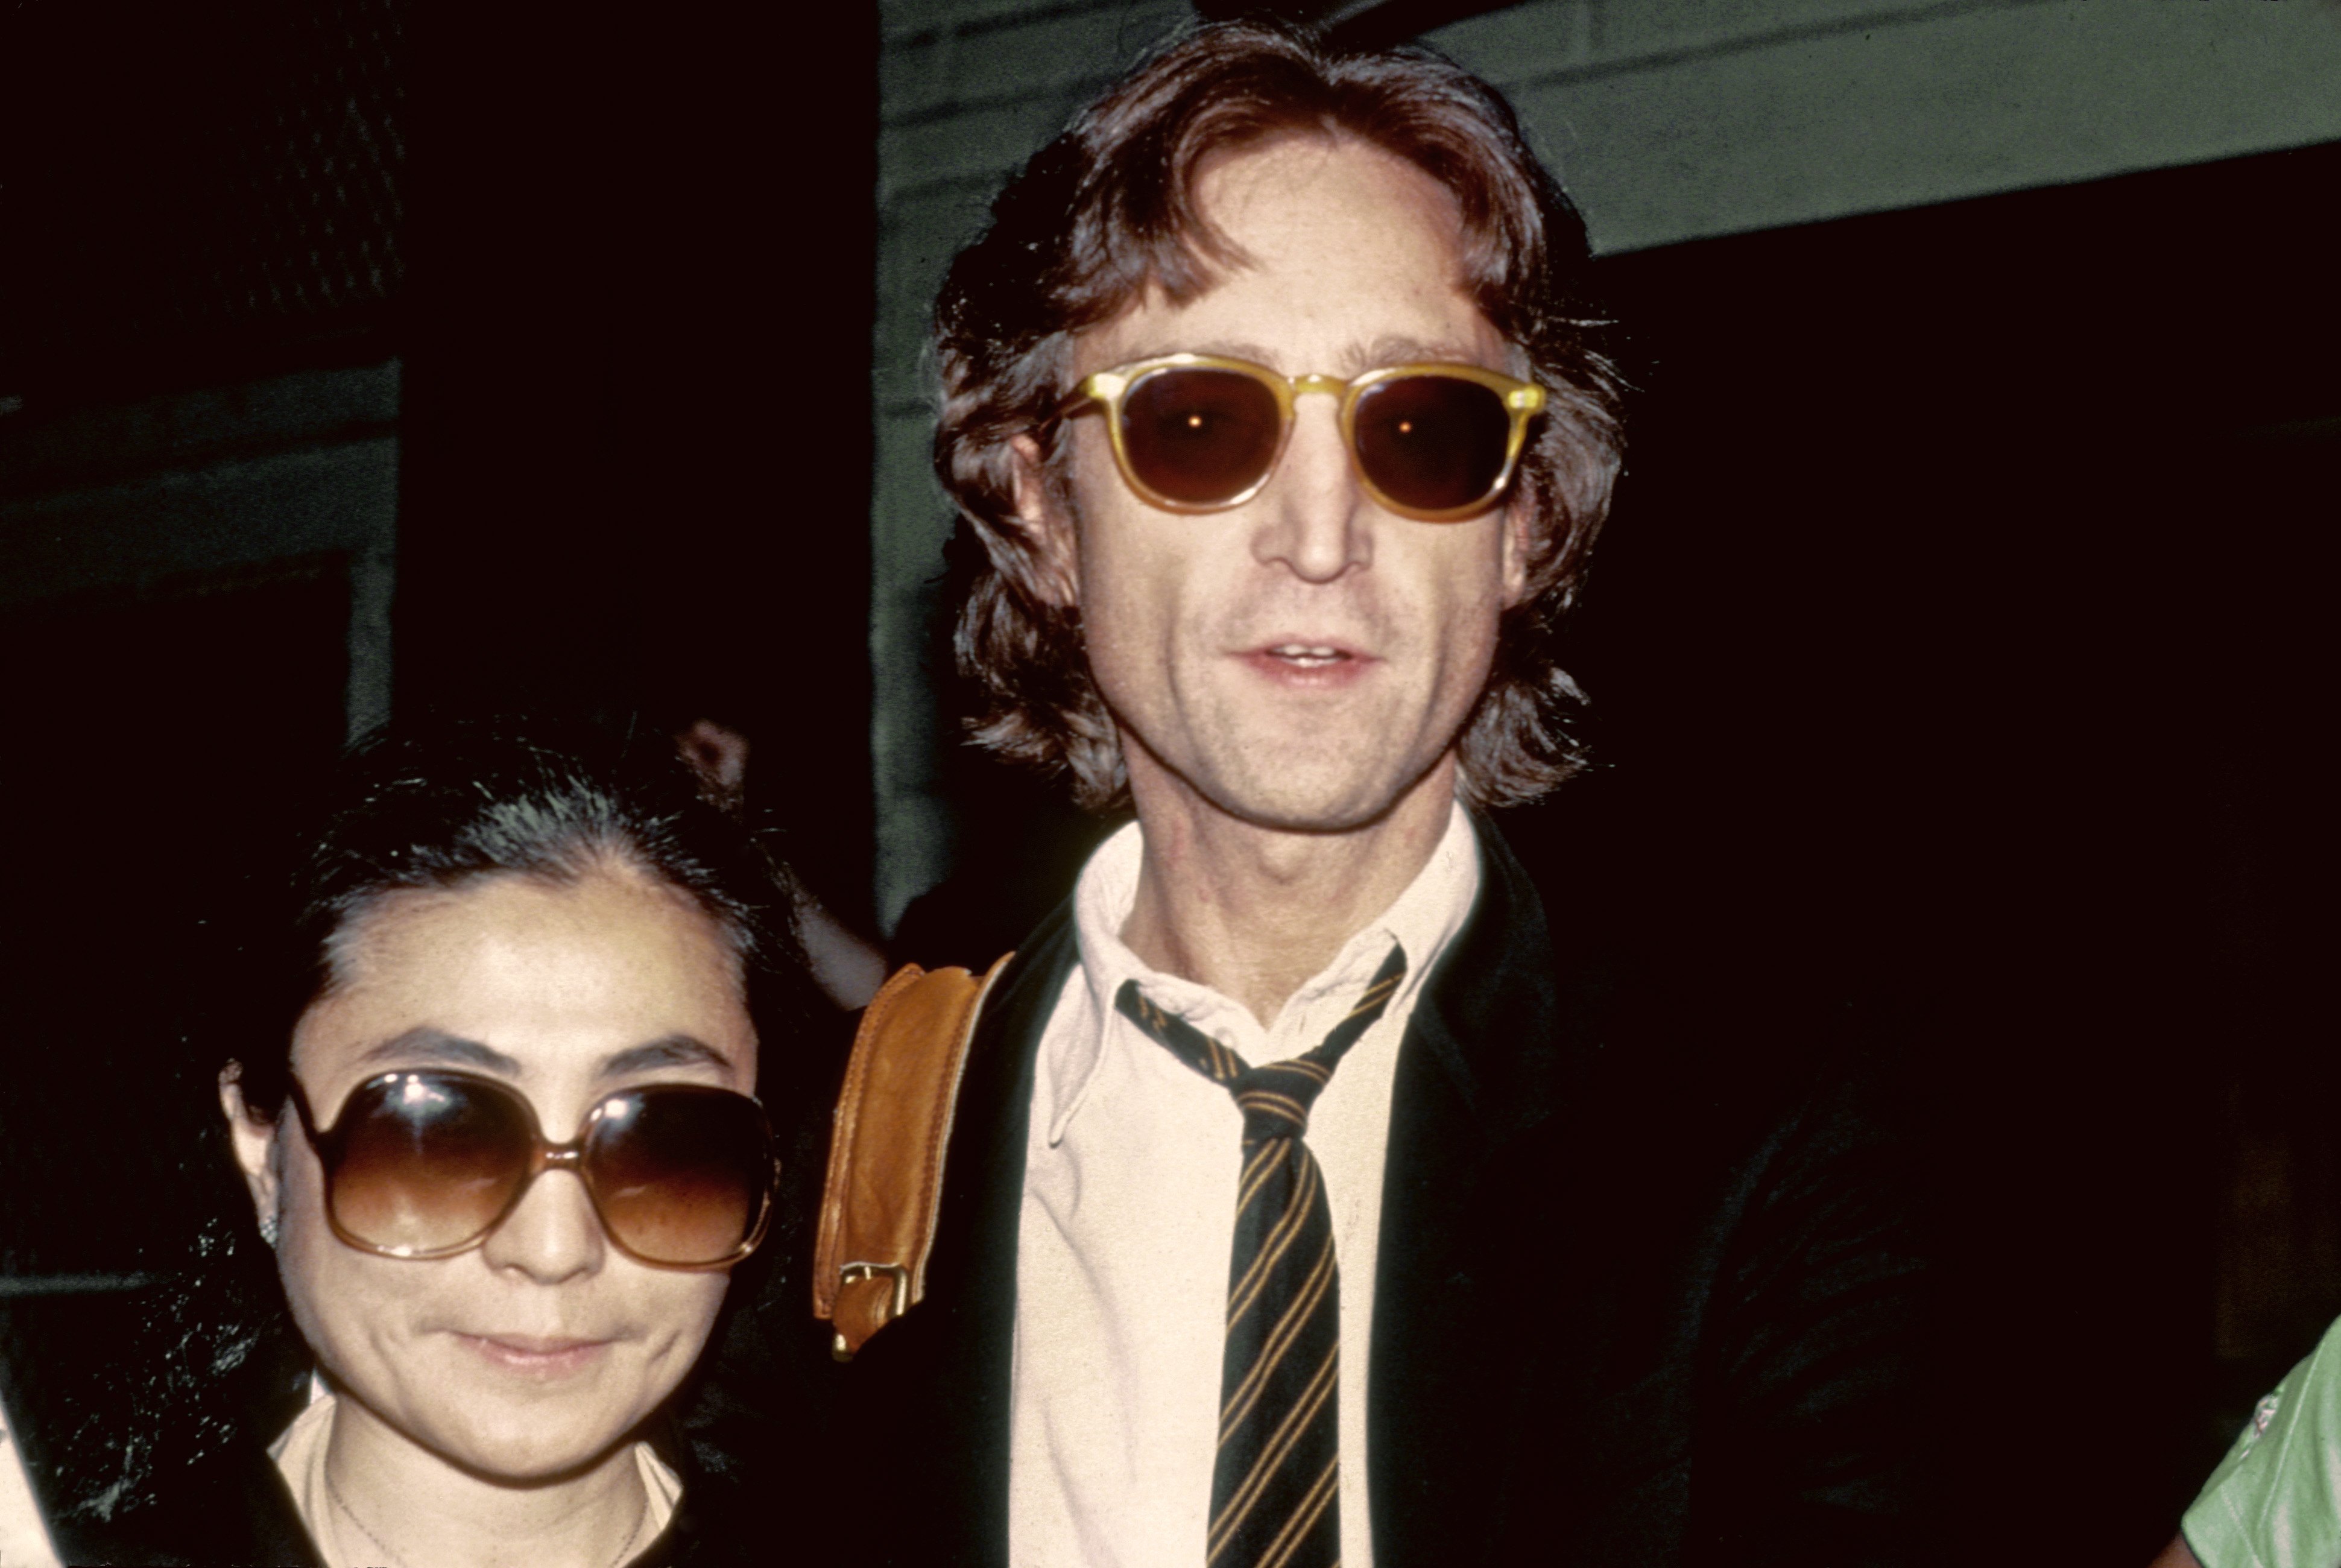 Yoko Ono and John Lennon wearing glasses